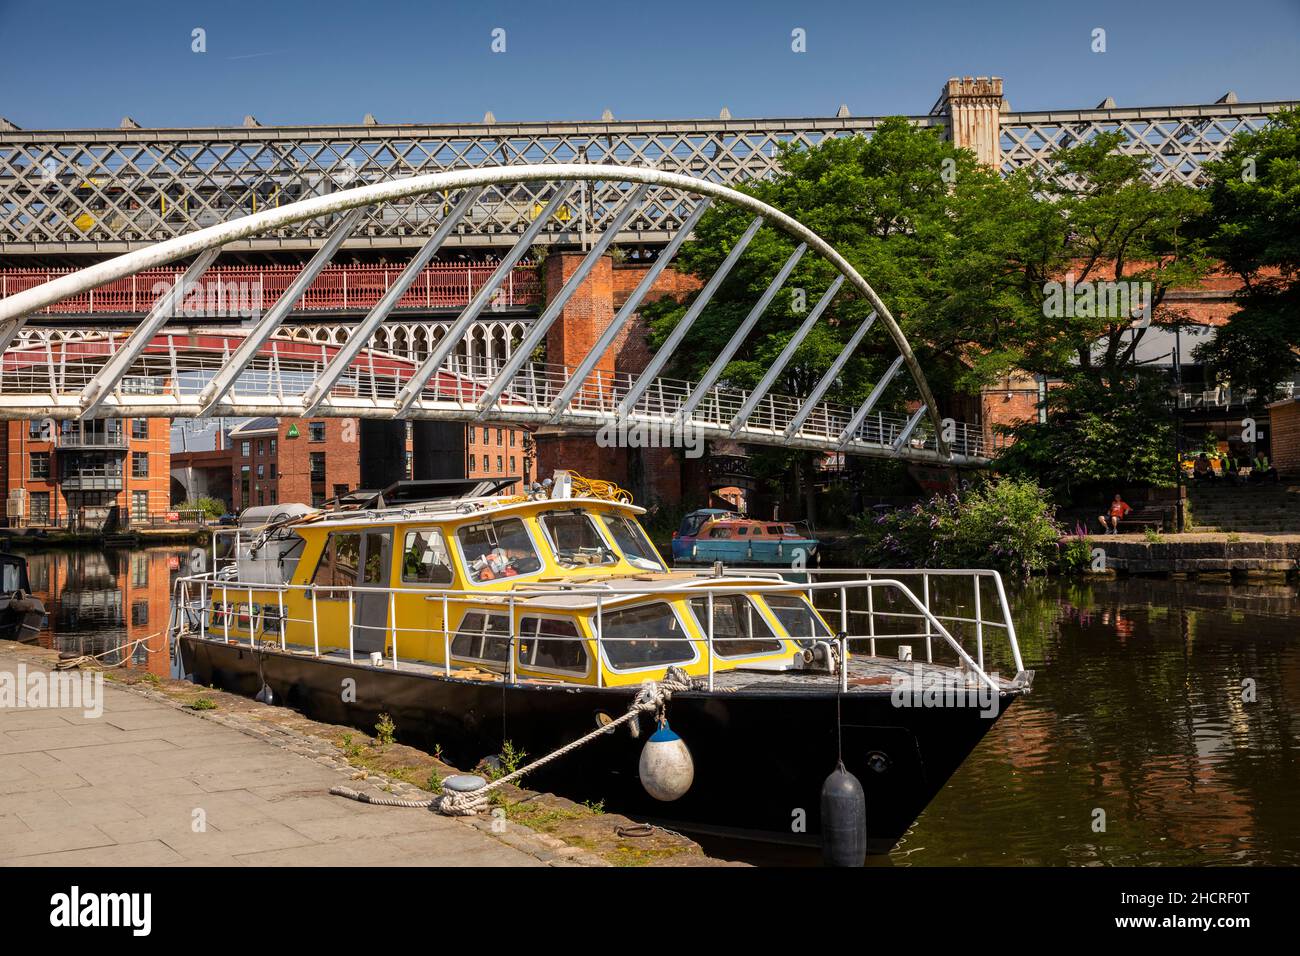 UK, England, Manchester, Castlefield, boat moored in Bridgewater Canal basin at Merchant’s Bridge Stock Photo